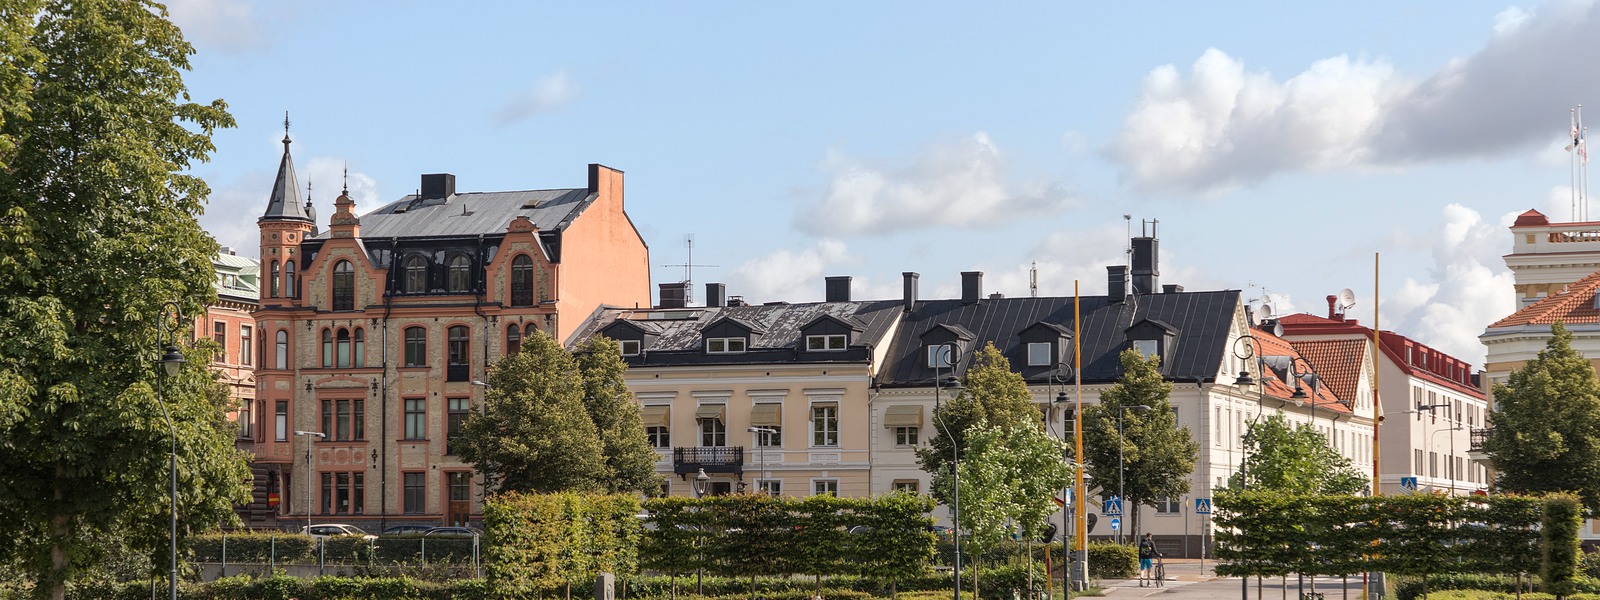 Mäklare Kristianstad